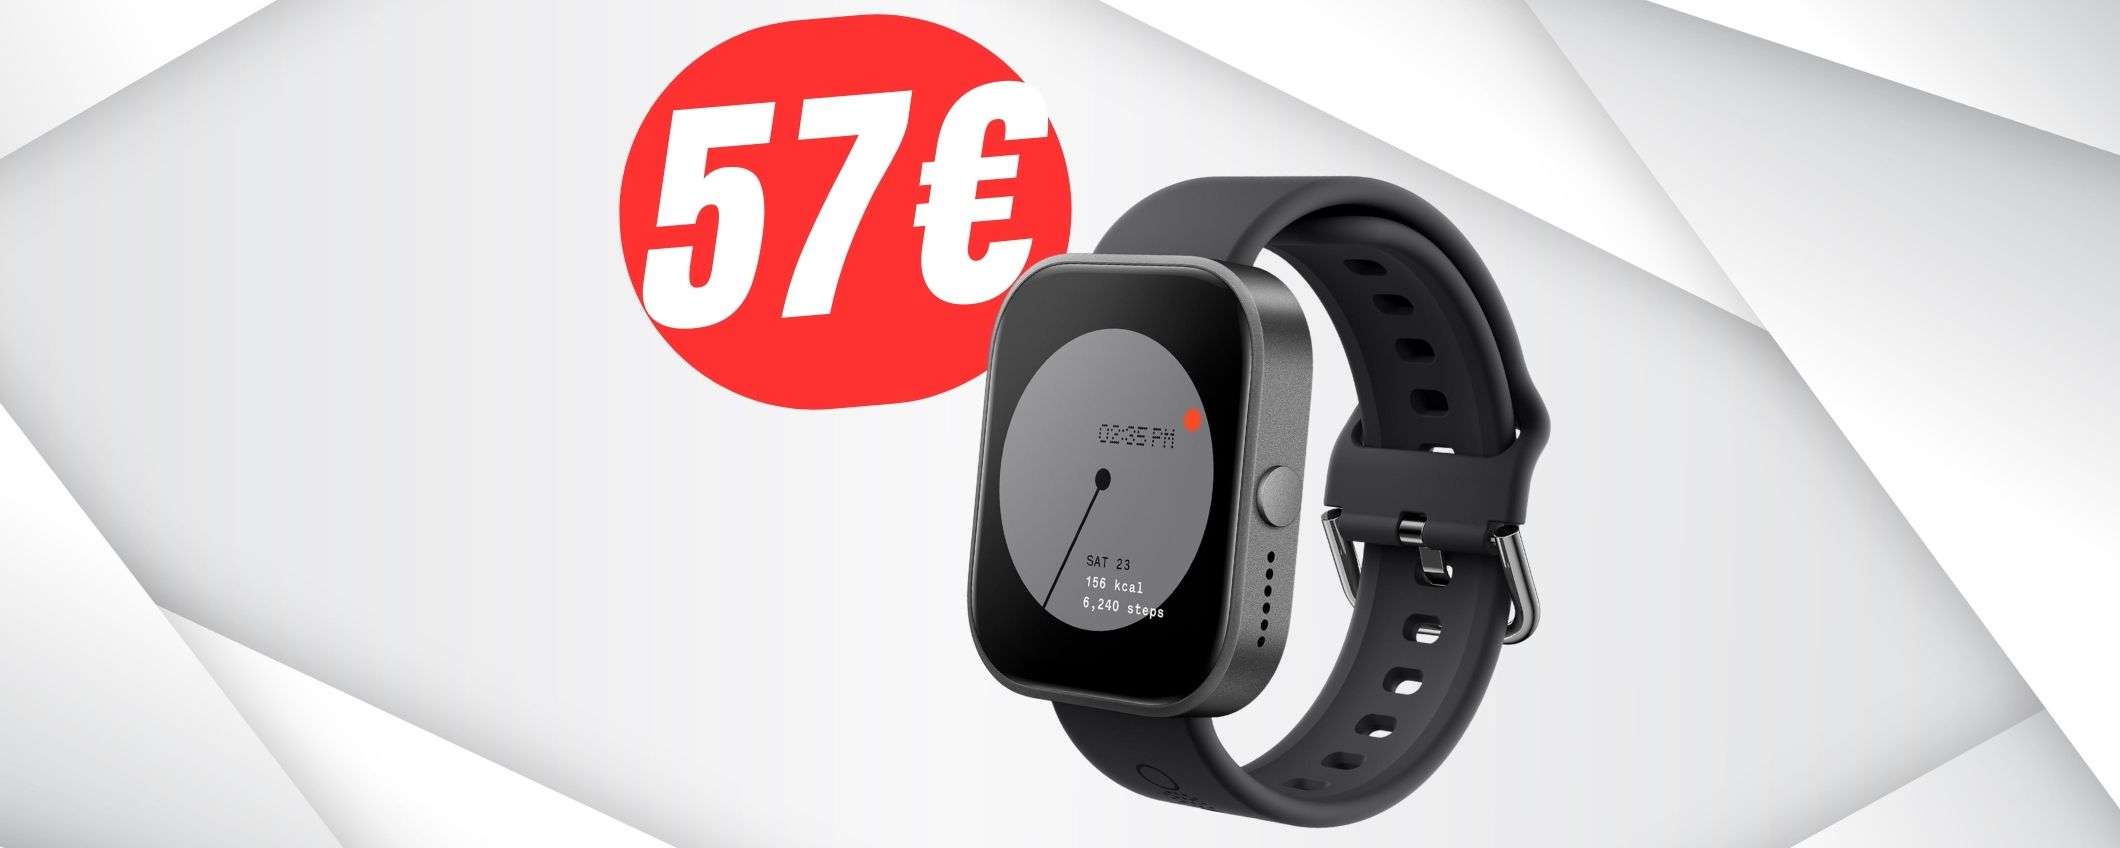 Come l'Apple Watch ma a 57€: lo SMARTWATCH di Nothing è pazzesco!